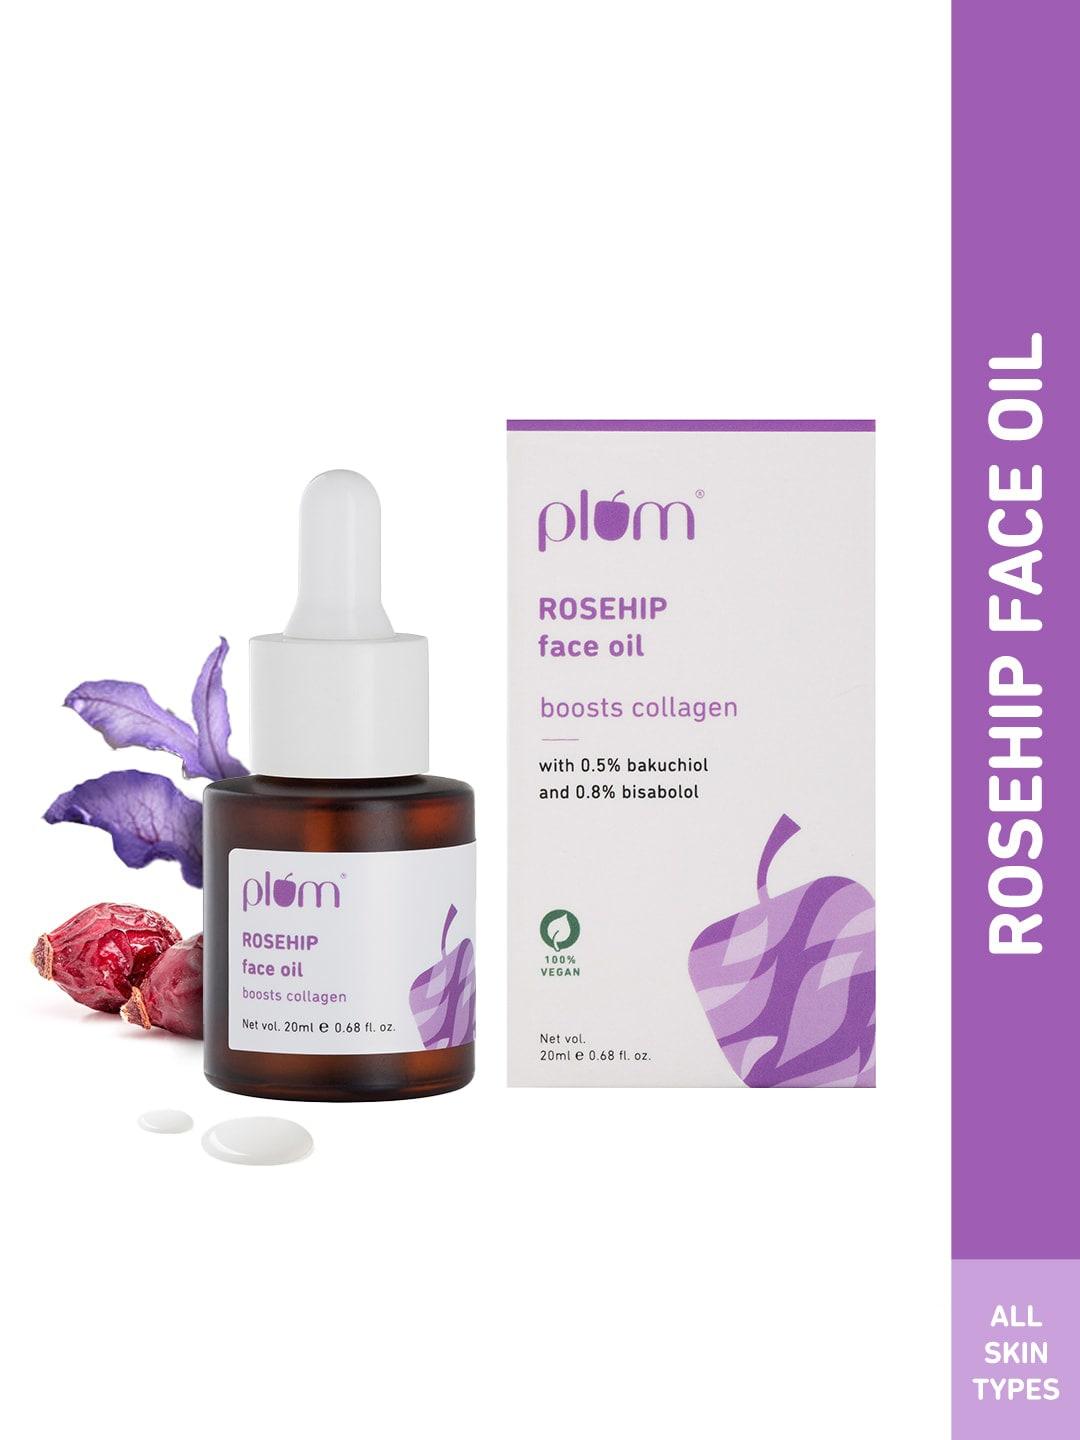 plum rosehip face oil with 0.5% bakuchiol & 0.8% bisabolol boosts collagen 20ml